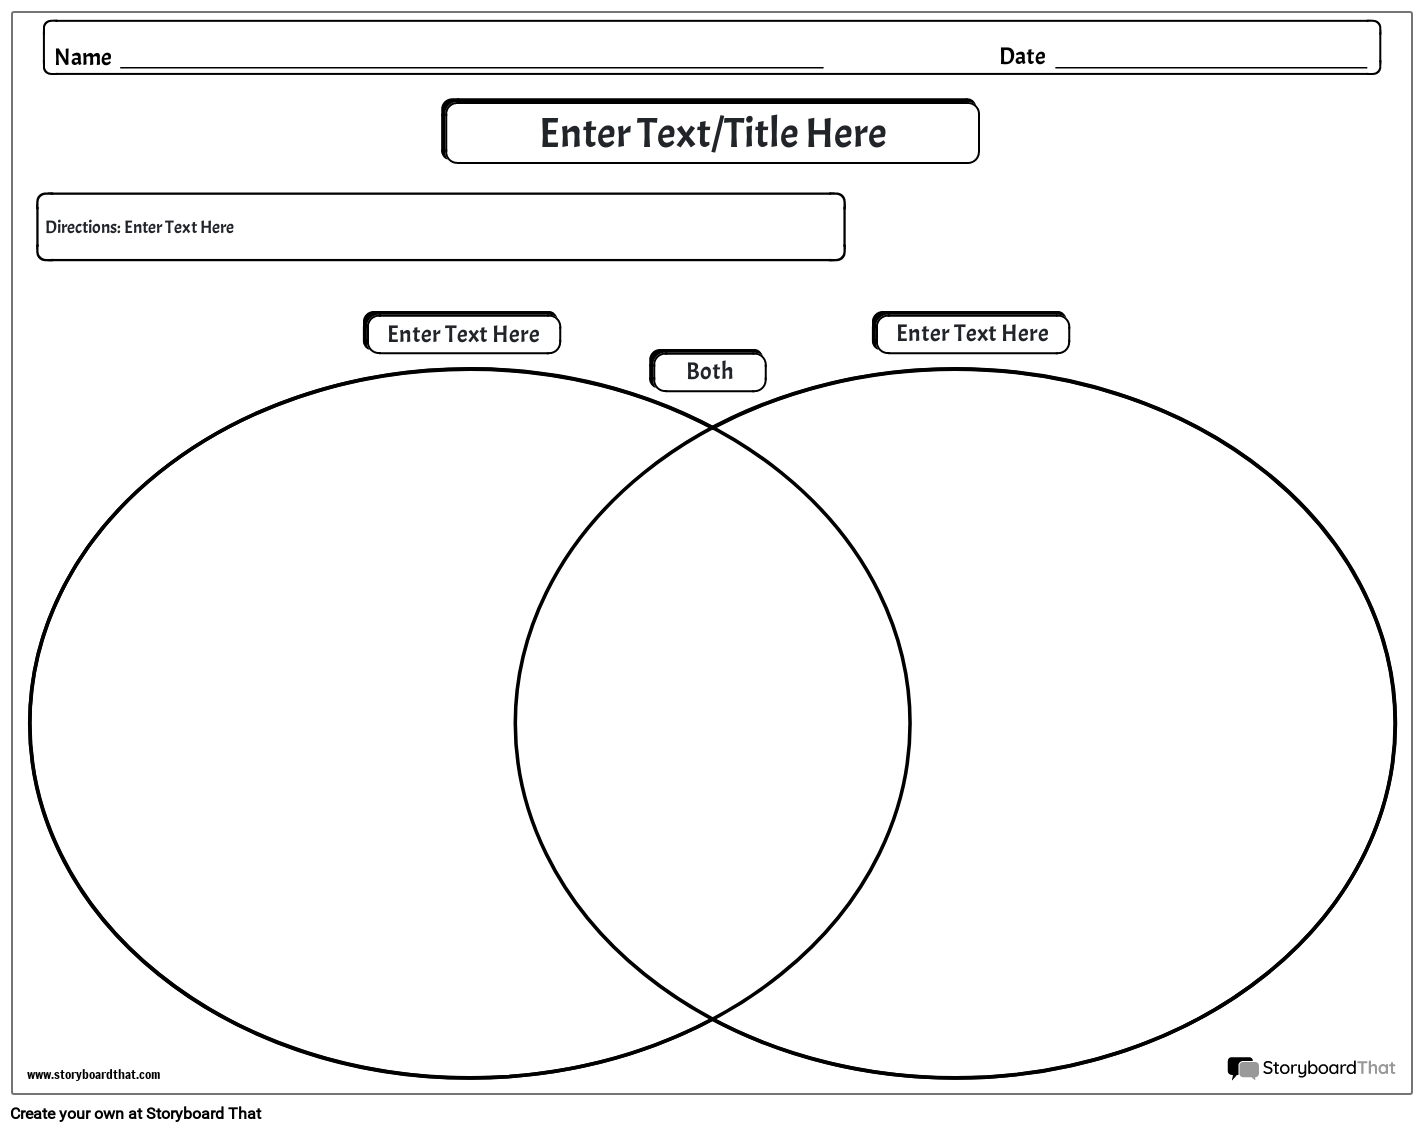 Customizable Two-Circle Venn Diagram Template